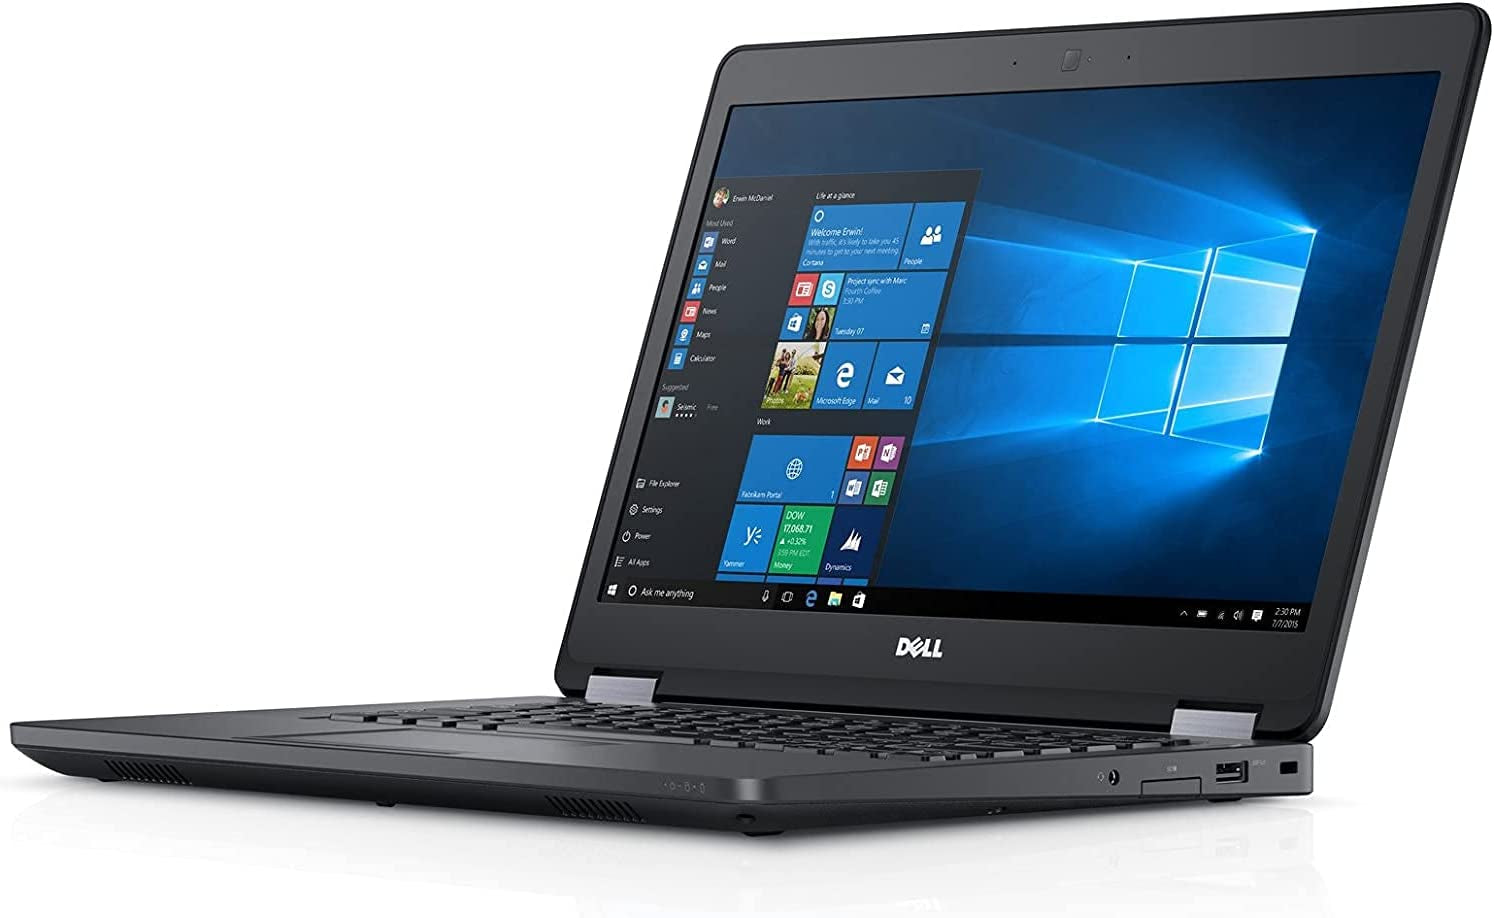 Latitude E5470 HD Business Laptop Notebook PC - Intel Core I7-6600U, 8GB Ram, 256GB SSD, HDMI, Camera, Wifi - Win 10 Pro (Renewed)